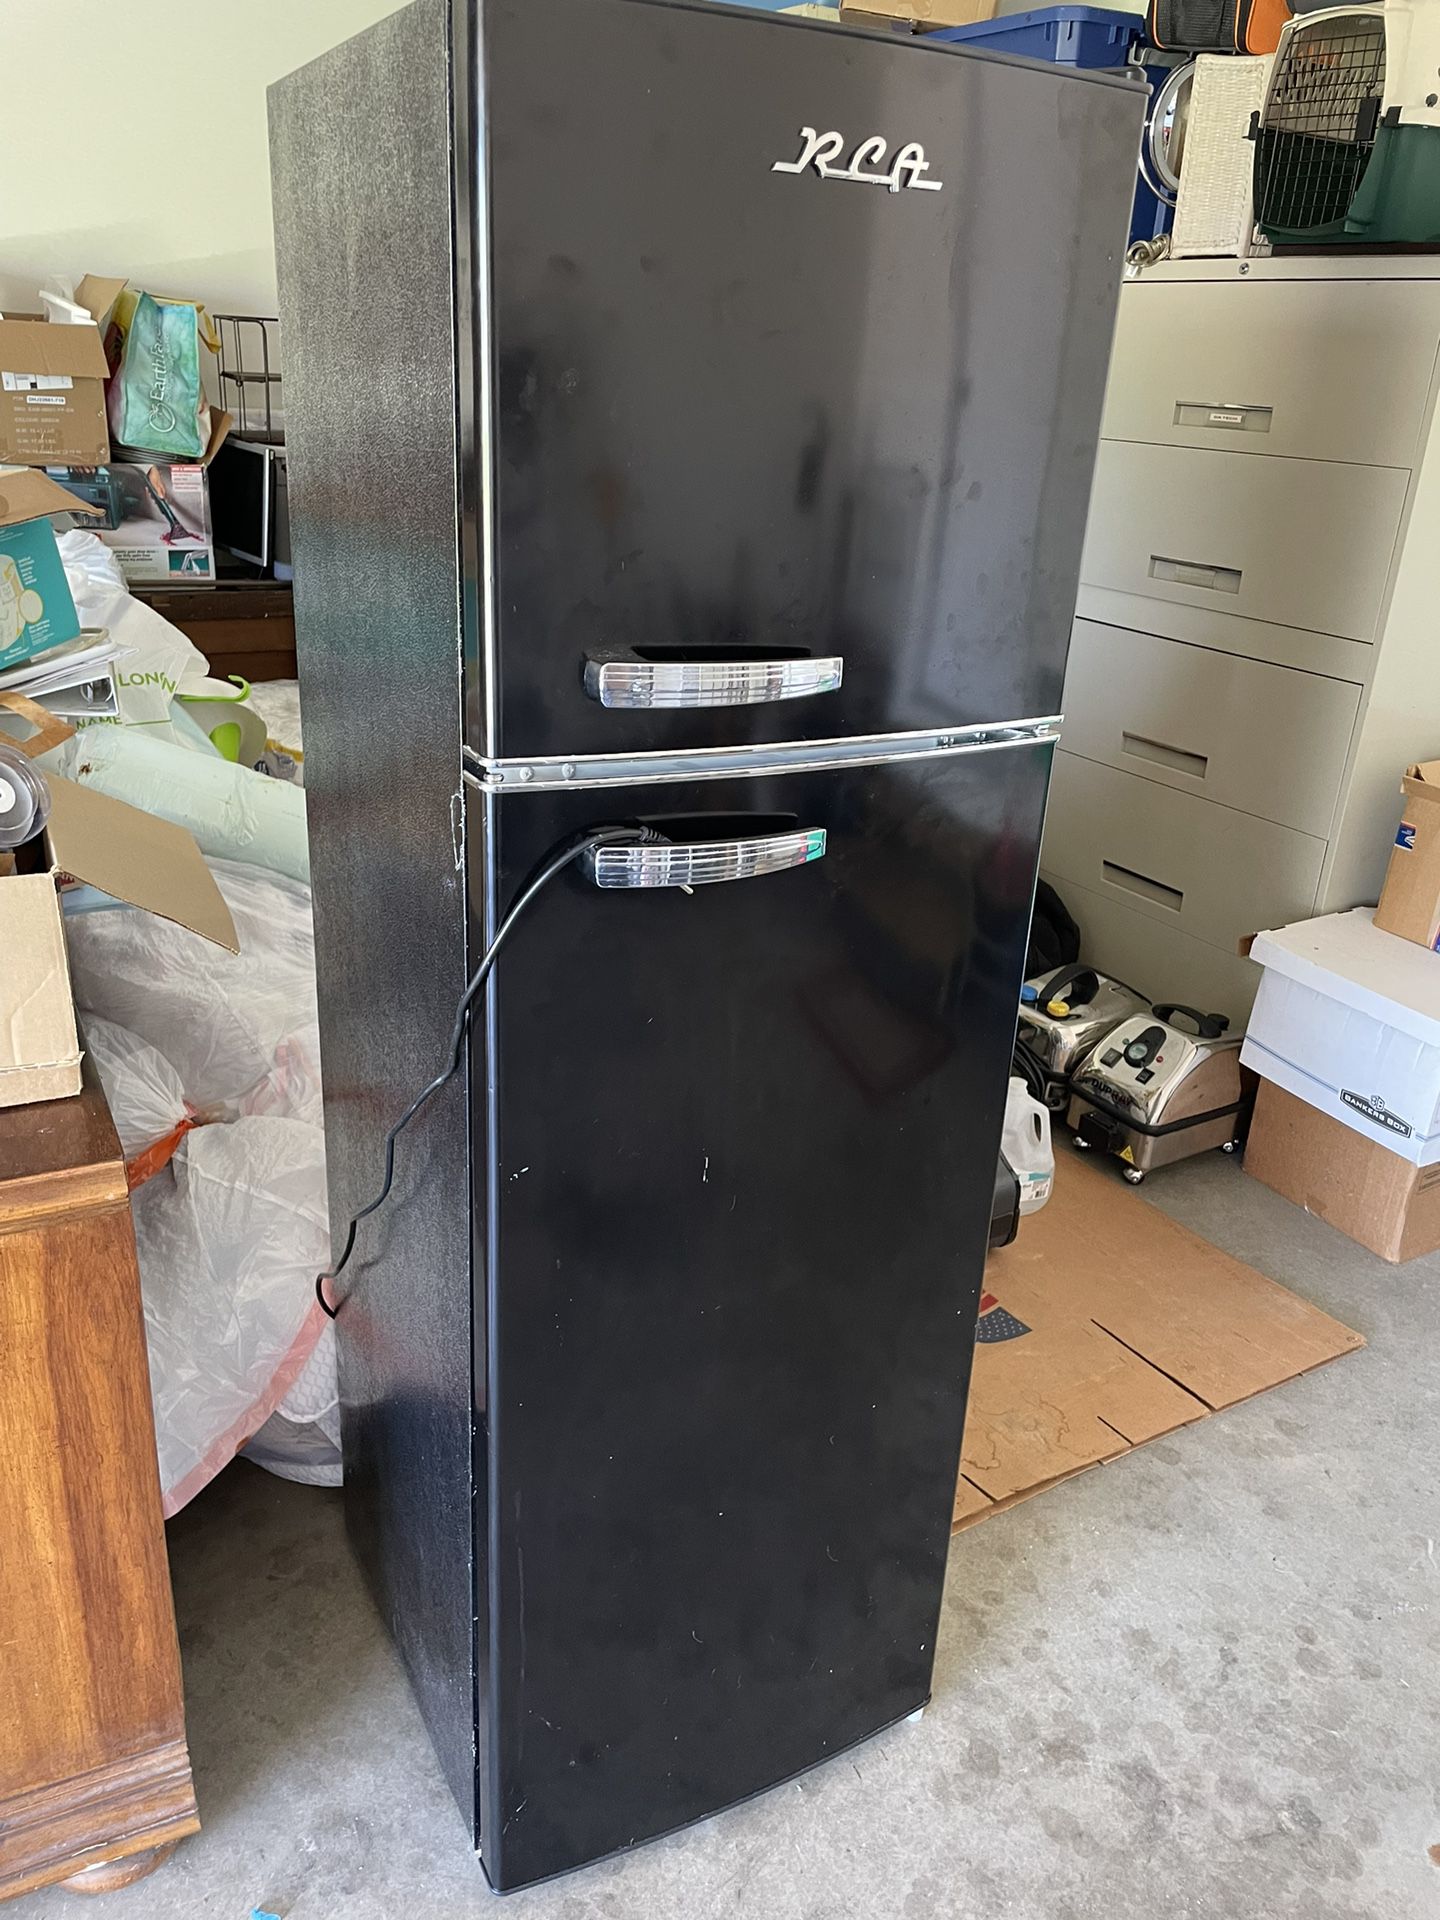 RCA RFR786-BLACK 2 Door Apartment Size Refrigerator with Freezer, 7.5 cu. ft, Retro Black